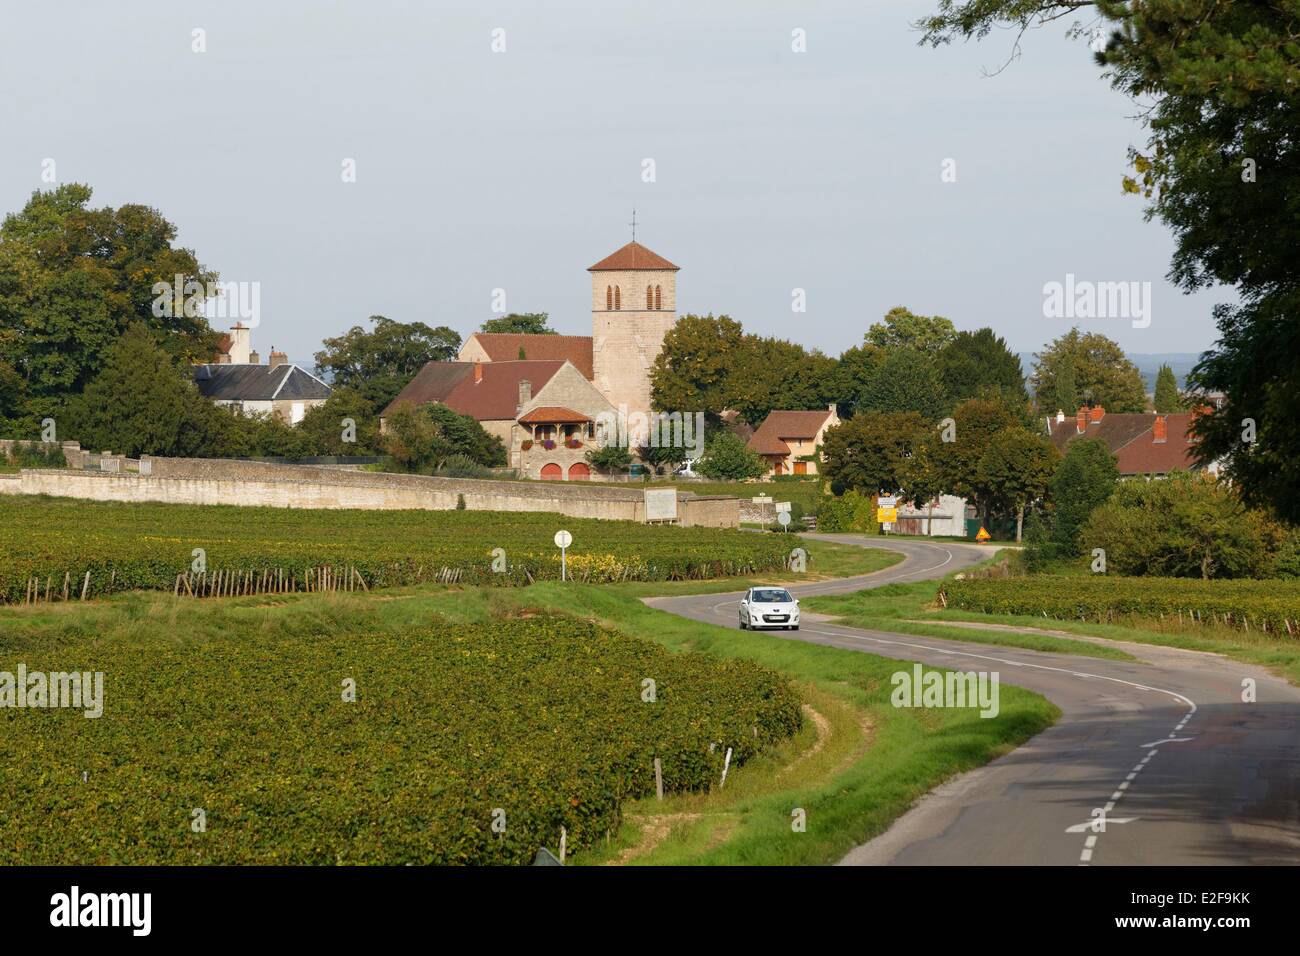 France, Cote d'Or, Gevrey Chambertin, Bourgogne Grand Cru, cote de Nuits vineyard Stock Photo